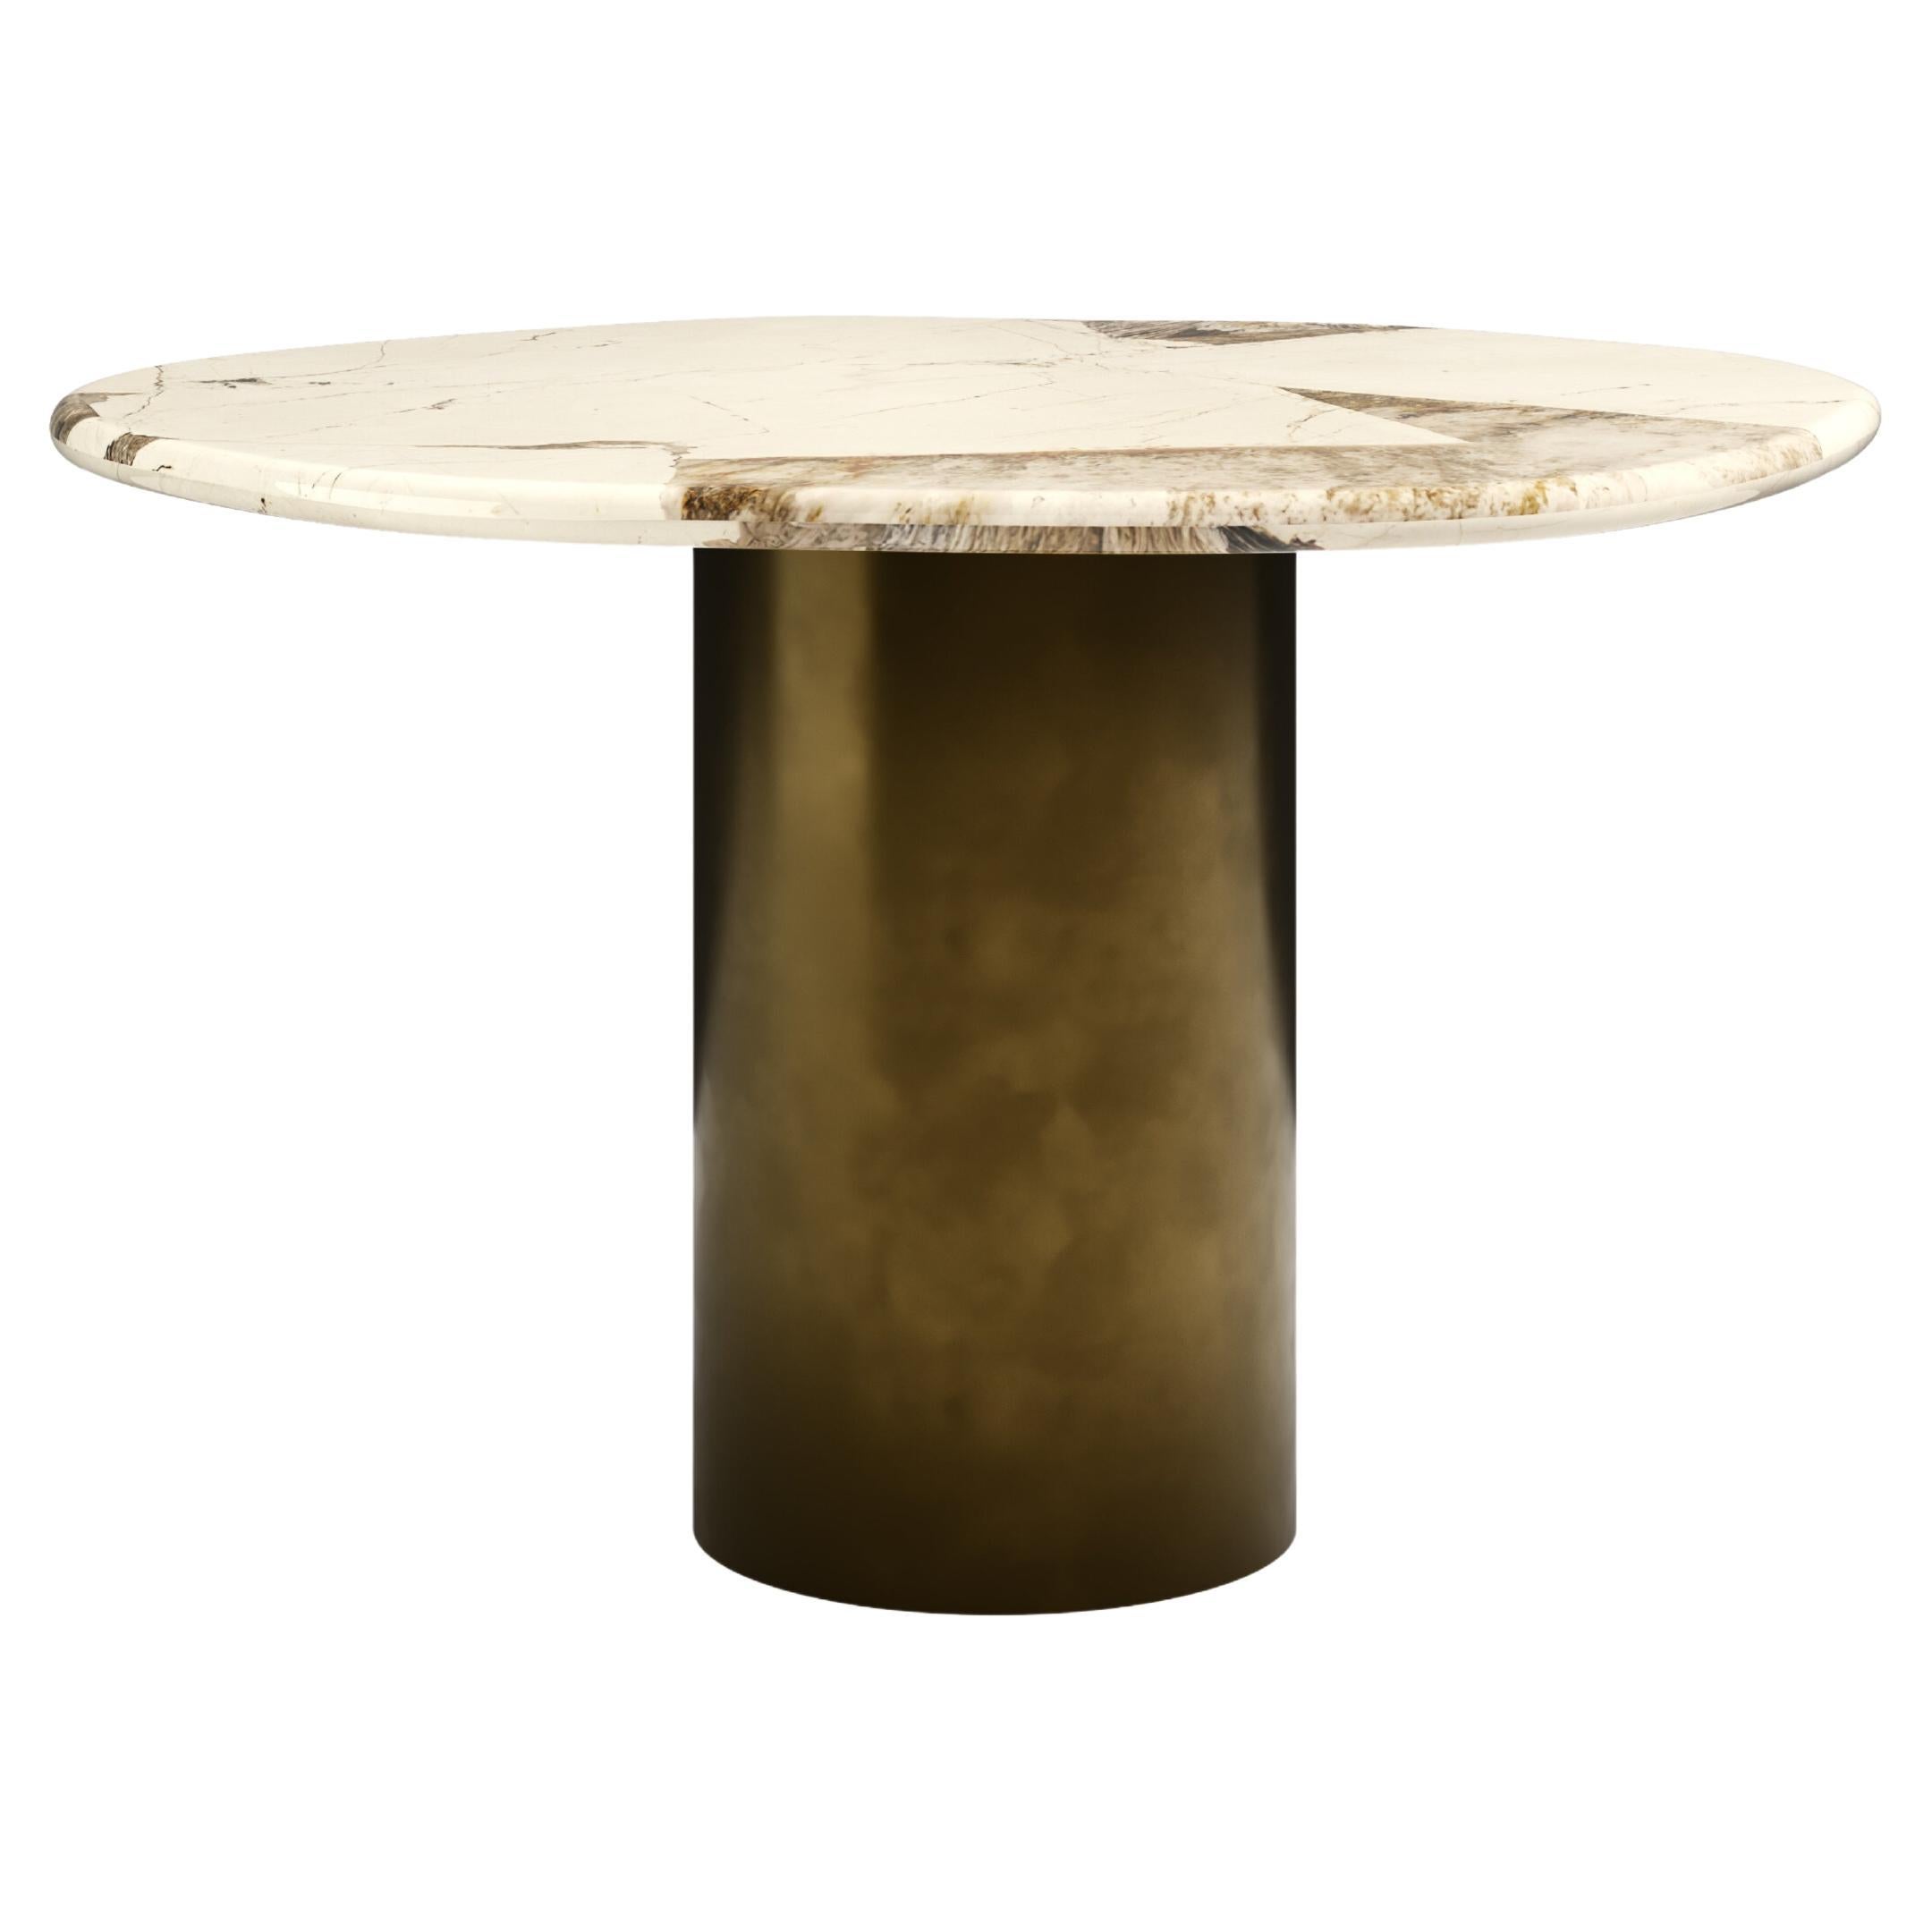 FORM(LA) Lago Round Dining Table 36”L x 36”W x 30”H Quartzite & Antique Bronze For Sale